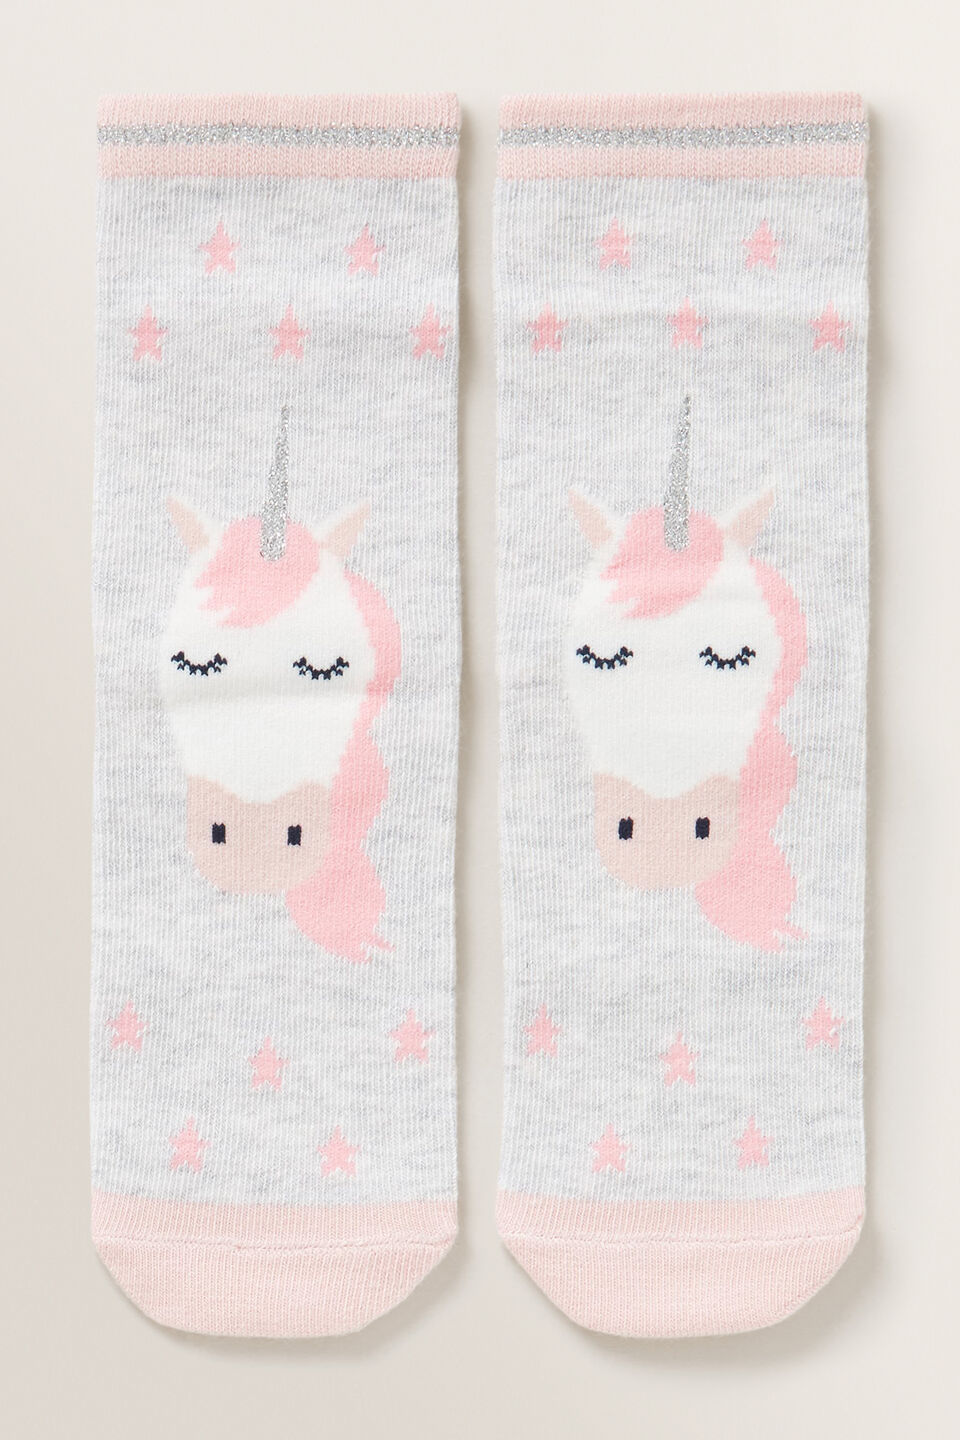 Unicorn Socks  